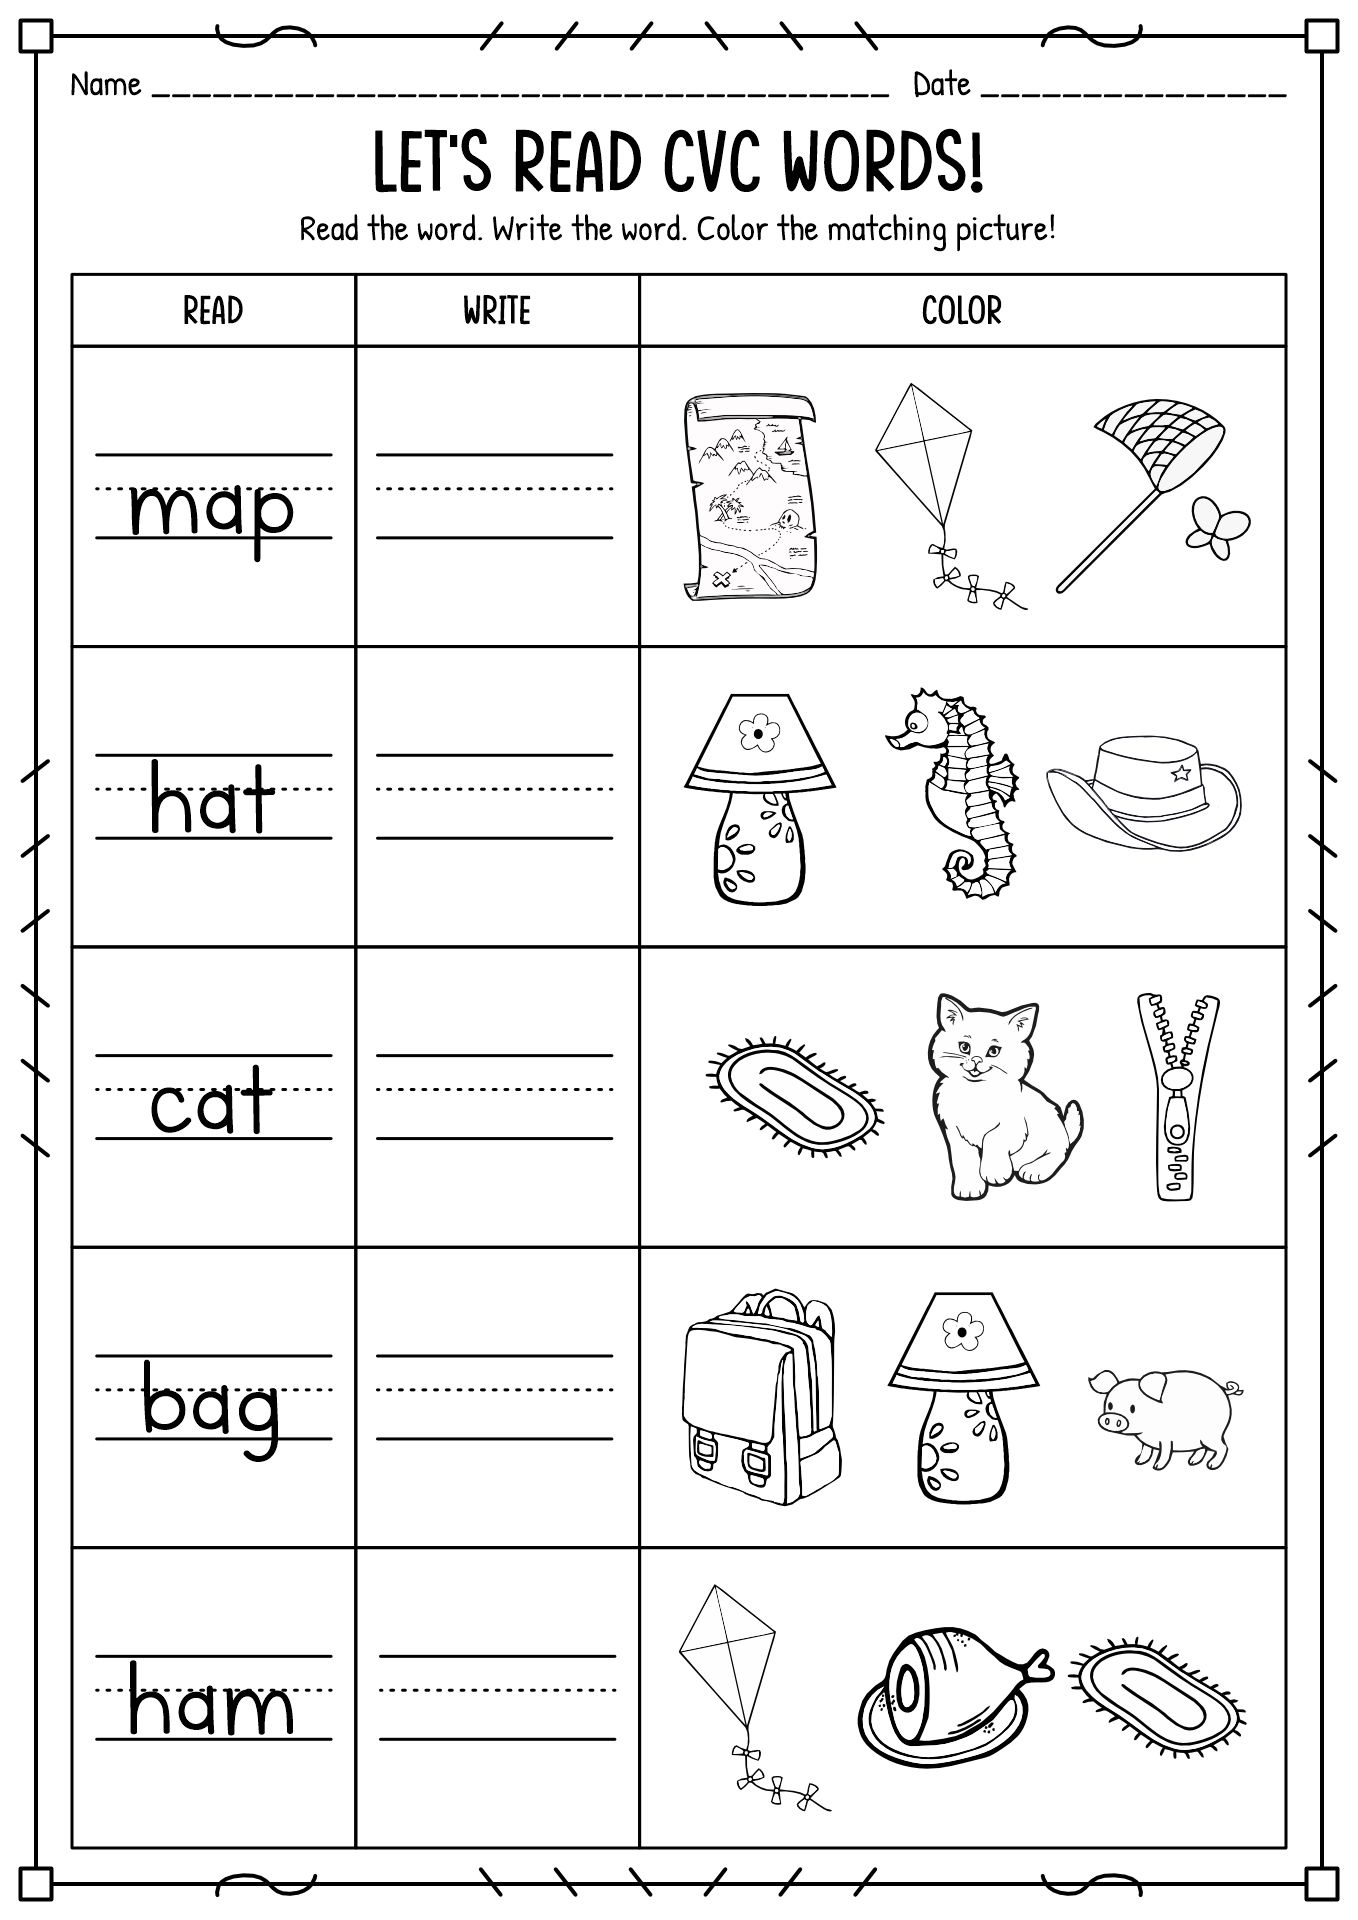 8 Kindergarten Language Arts Worksheets - Free Pdf At Worksheeto intended for Free Printable Language Arts Worksheets For Kindergarten